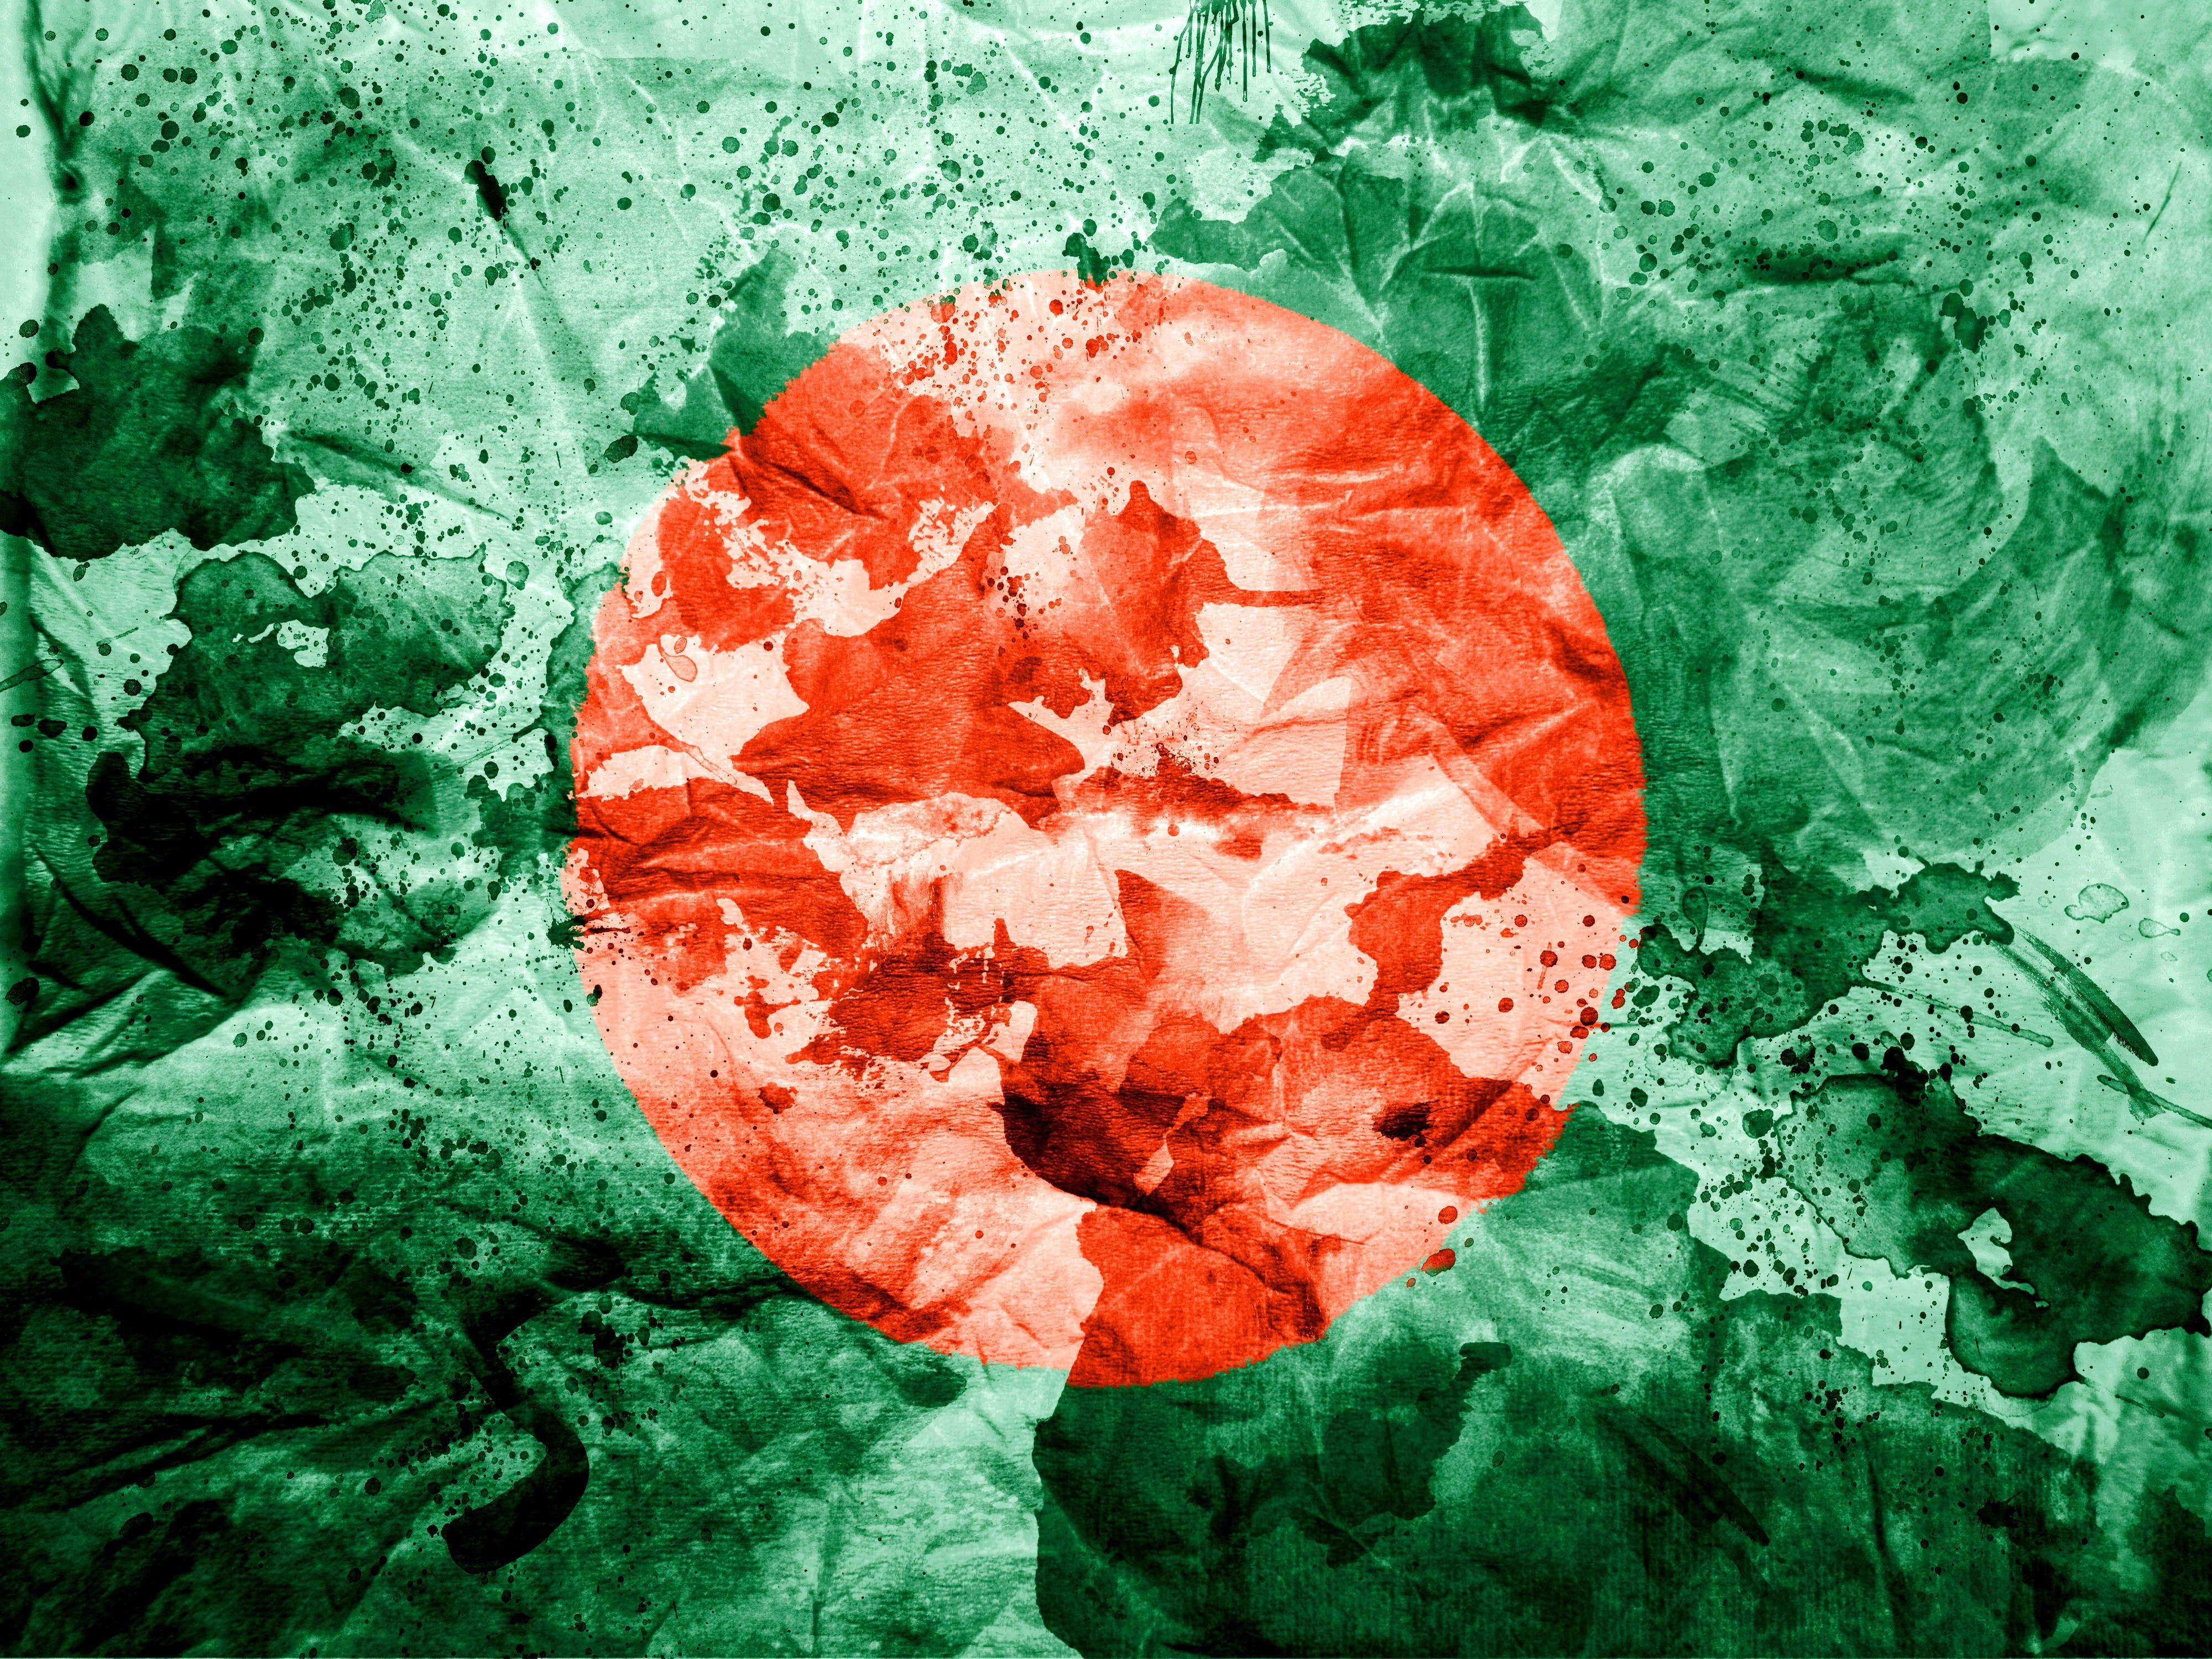 Bangladesh in Turmoil. War Crimes Protests Escalate